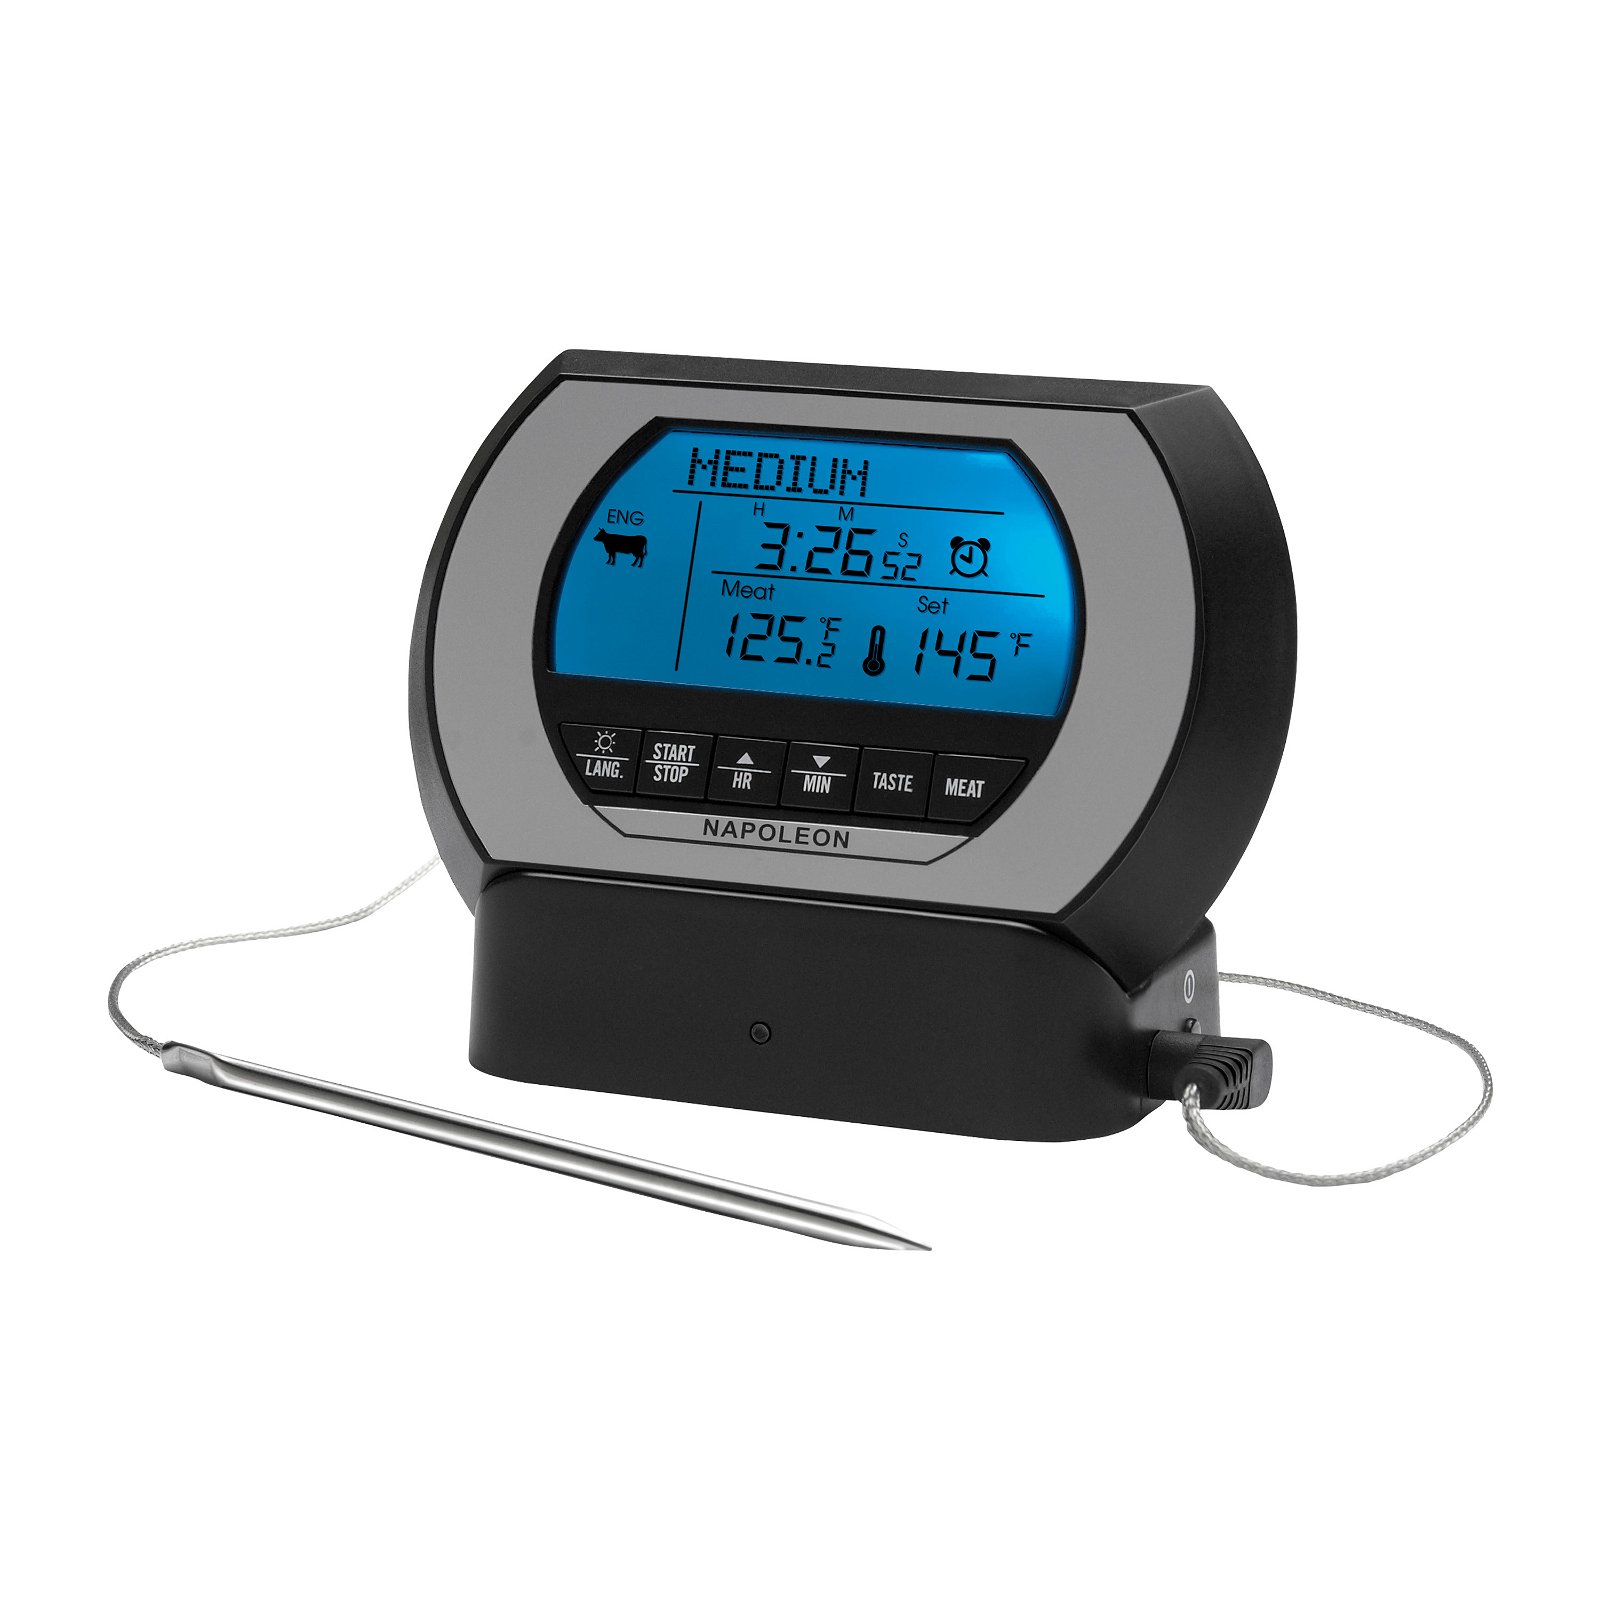 Napoleon PRO Digital Thermometer, wireless